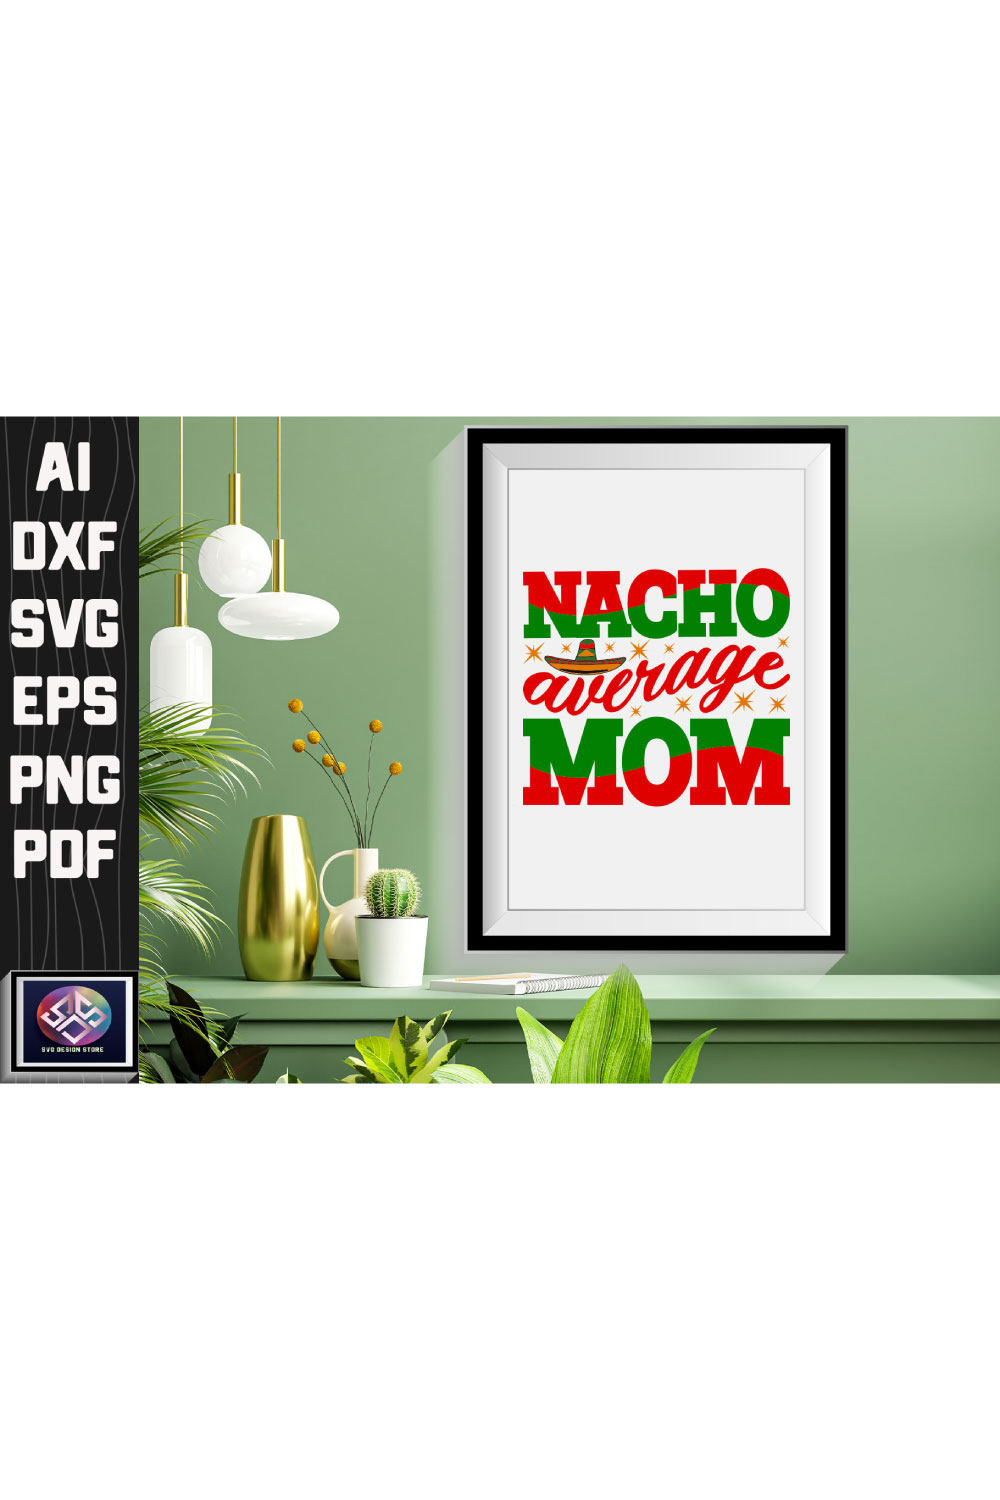 Nacho Average Mom pinterest preview image.